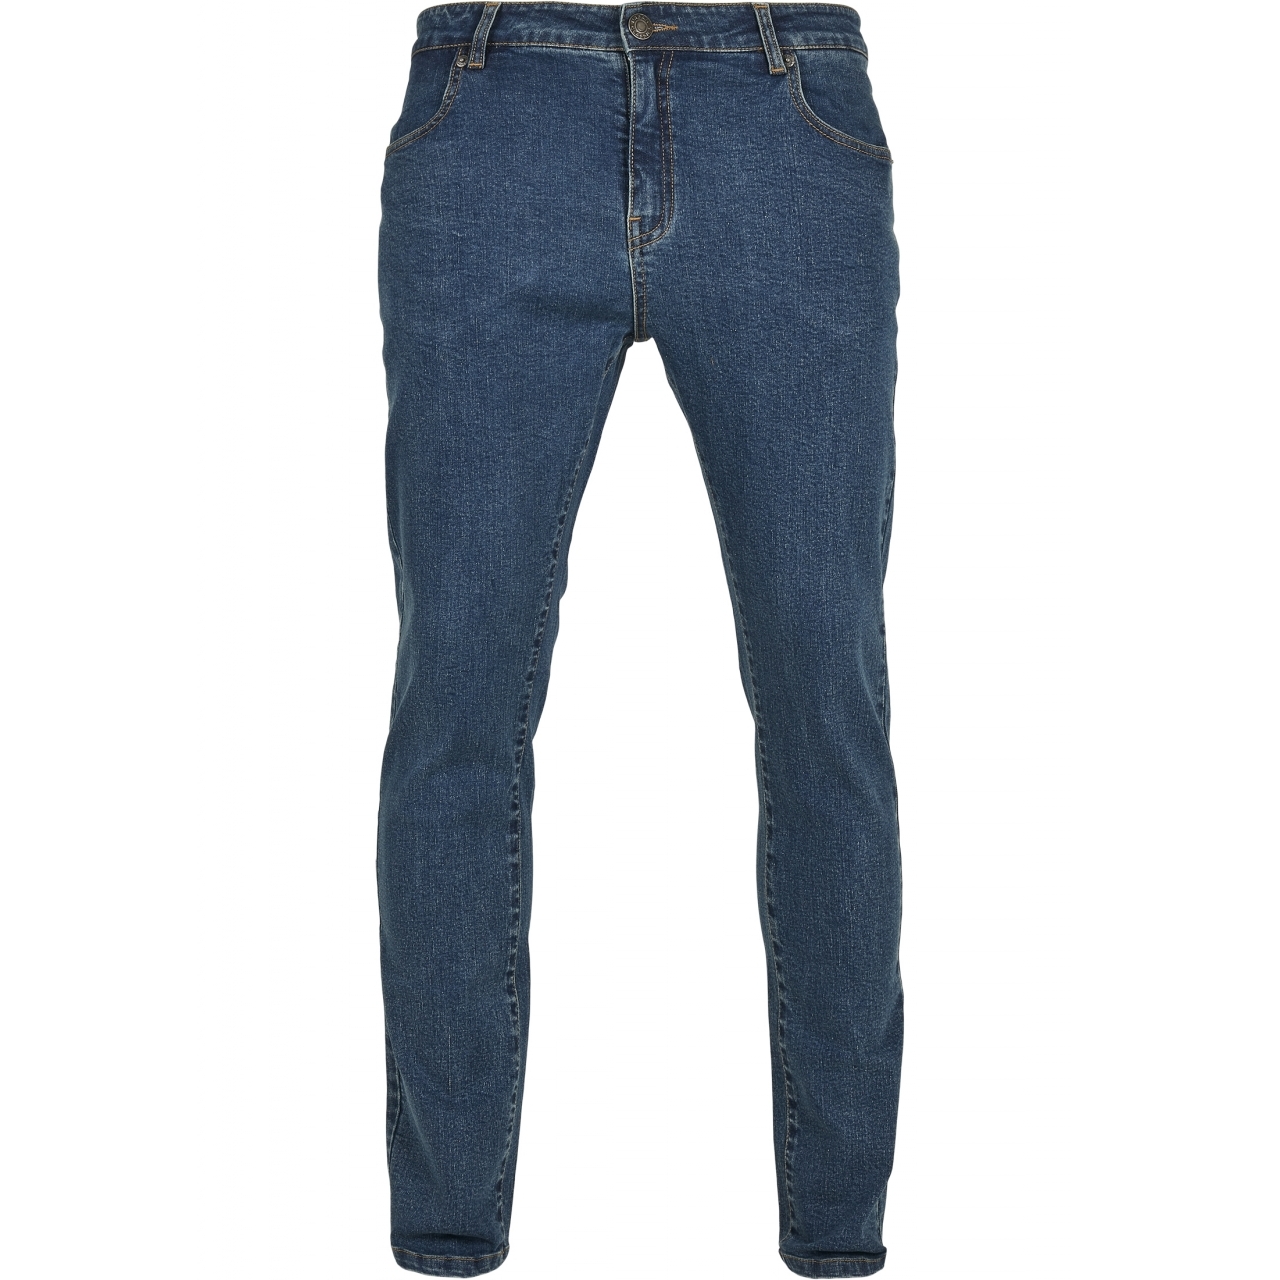 Džíny Urban Classics Slim Fit Jeans - modré, 29/32